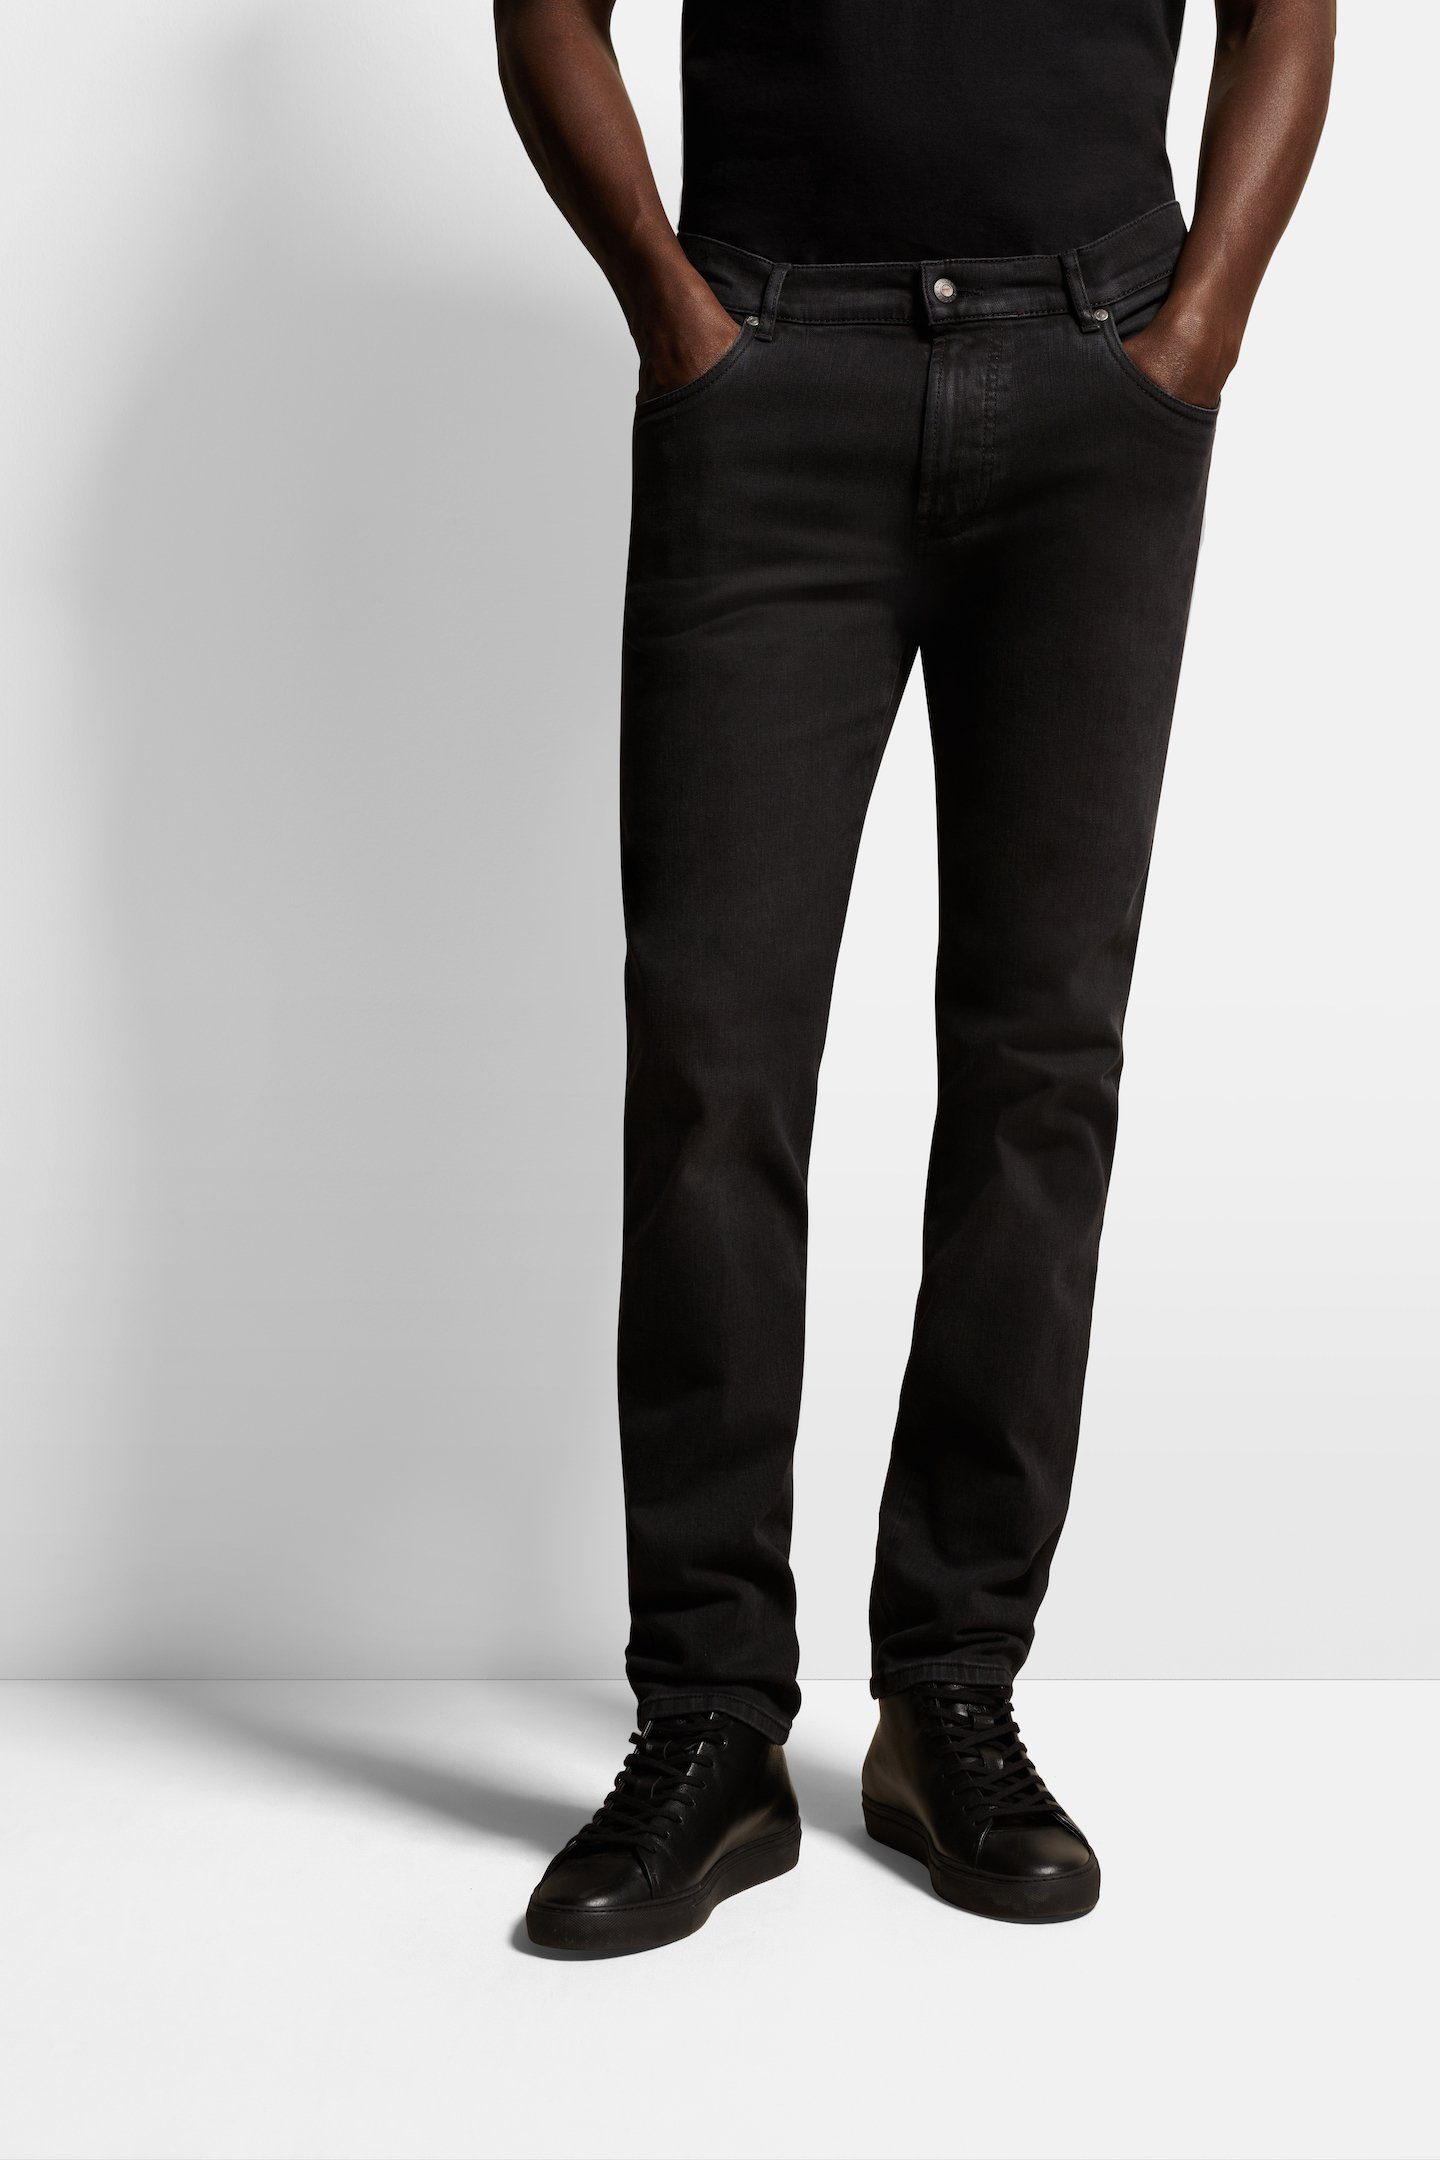 bugatti 5-Pocket-Jeans Flexcity Denim mit Tragekomfort hohem dunkelgrau